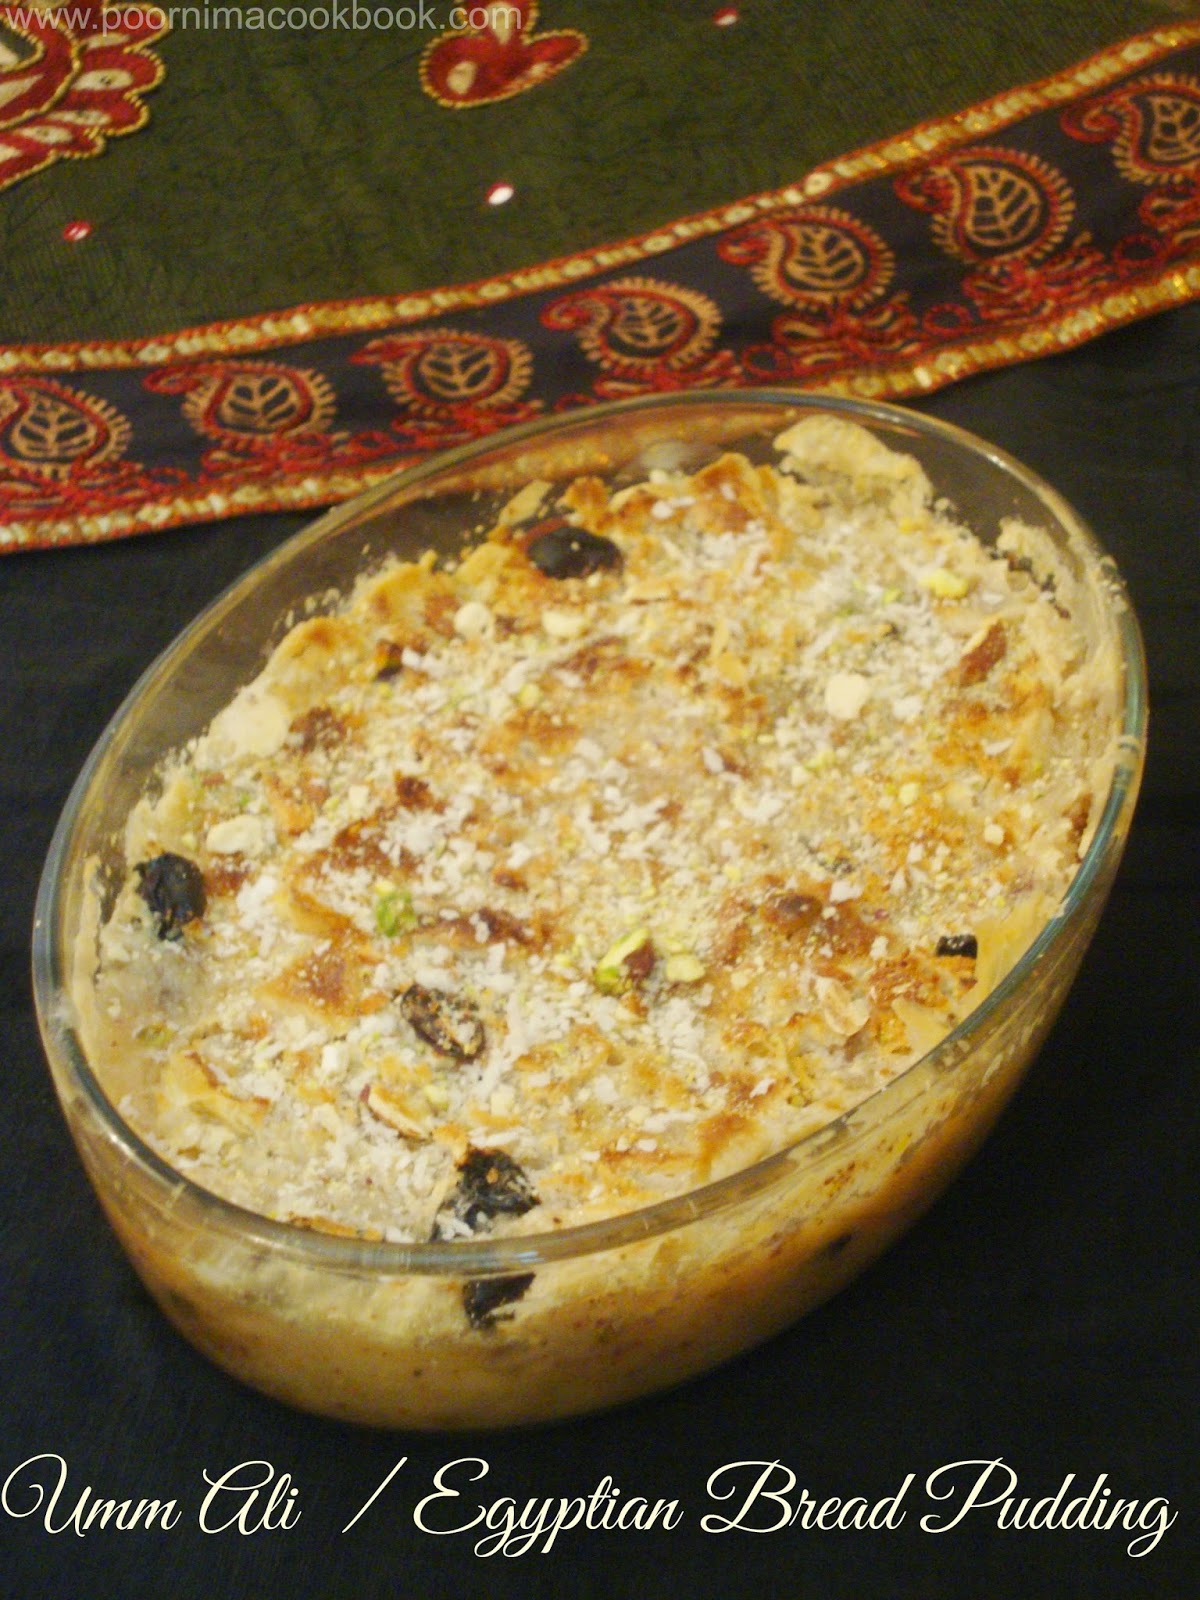 Poornima&amp;#39;s Cook Book: Umm Ali - Egyptian Bread Pudding